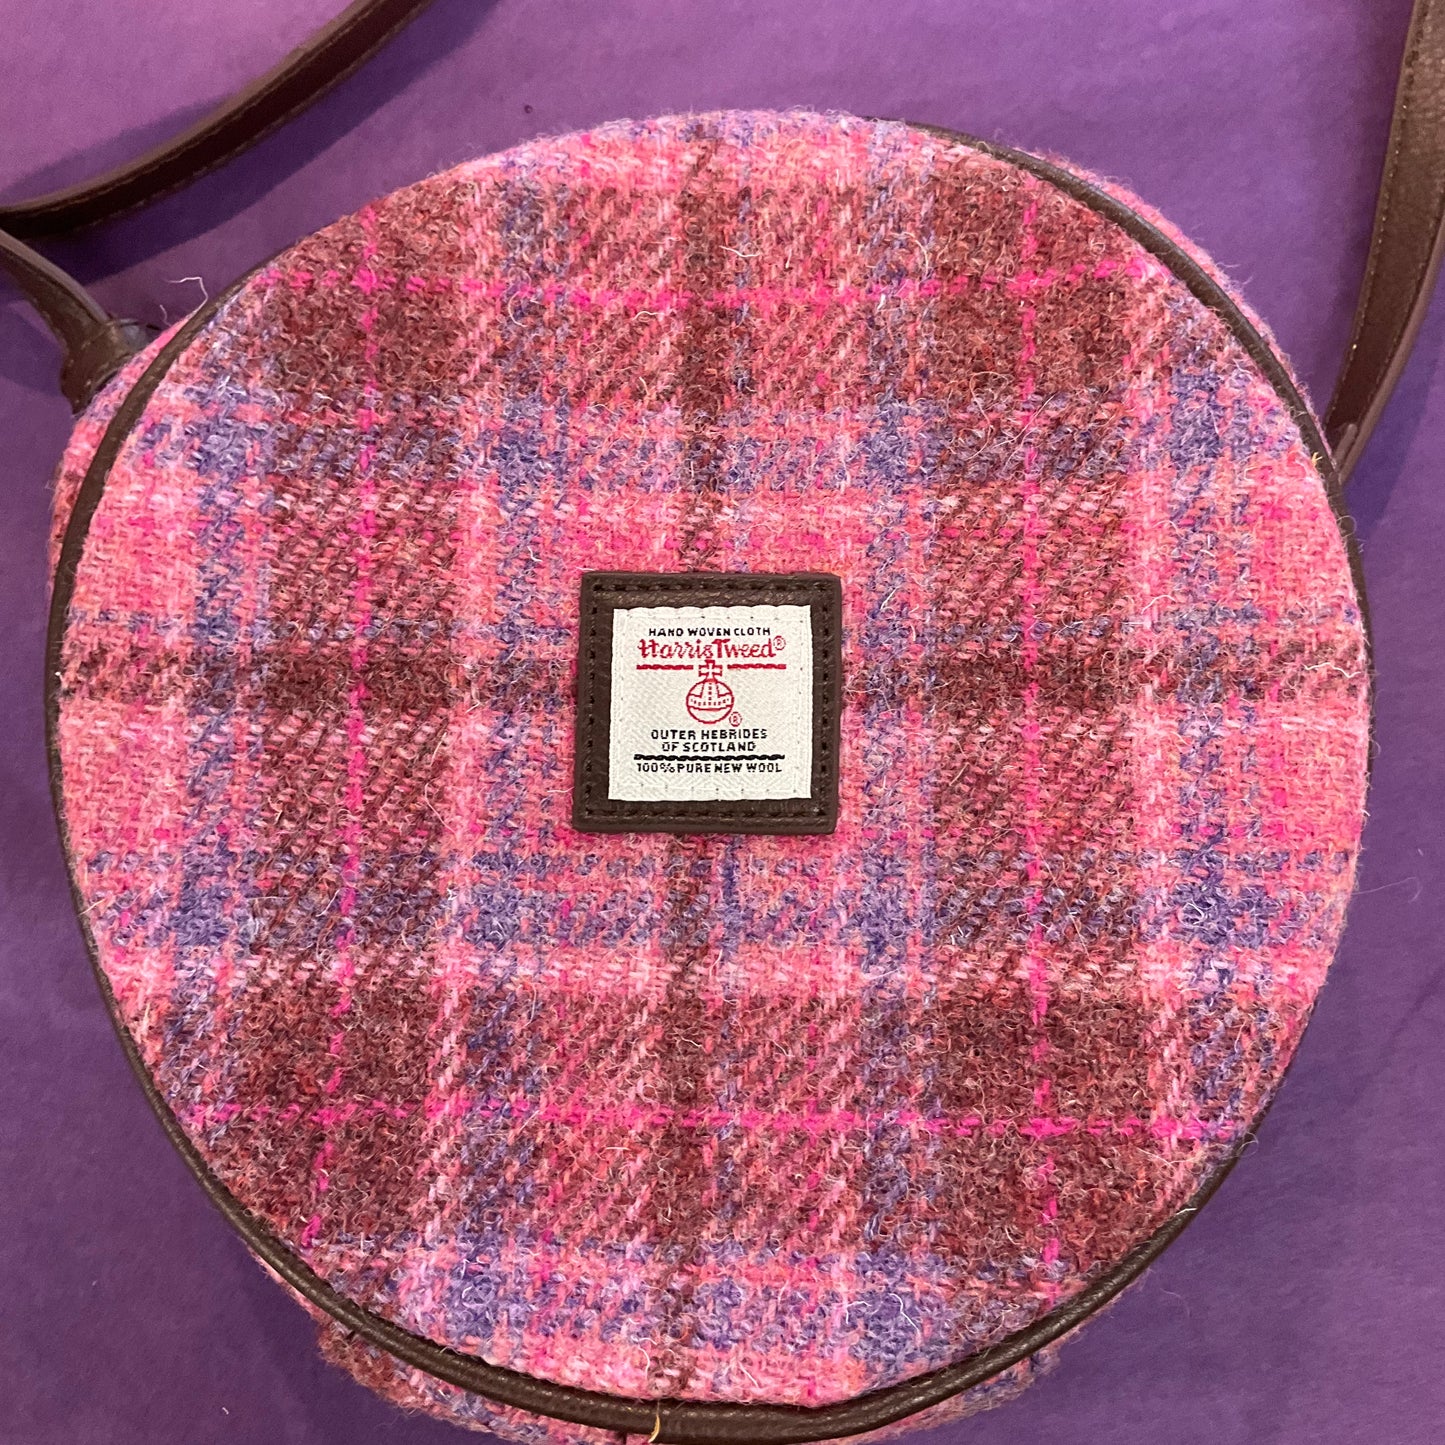 Vintage tartan Harris Tweed shoulder/crossbody bag by GLEN APPIN of Scotland